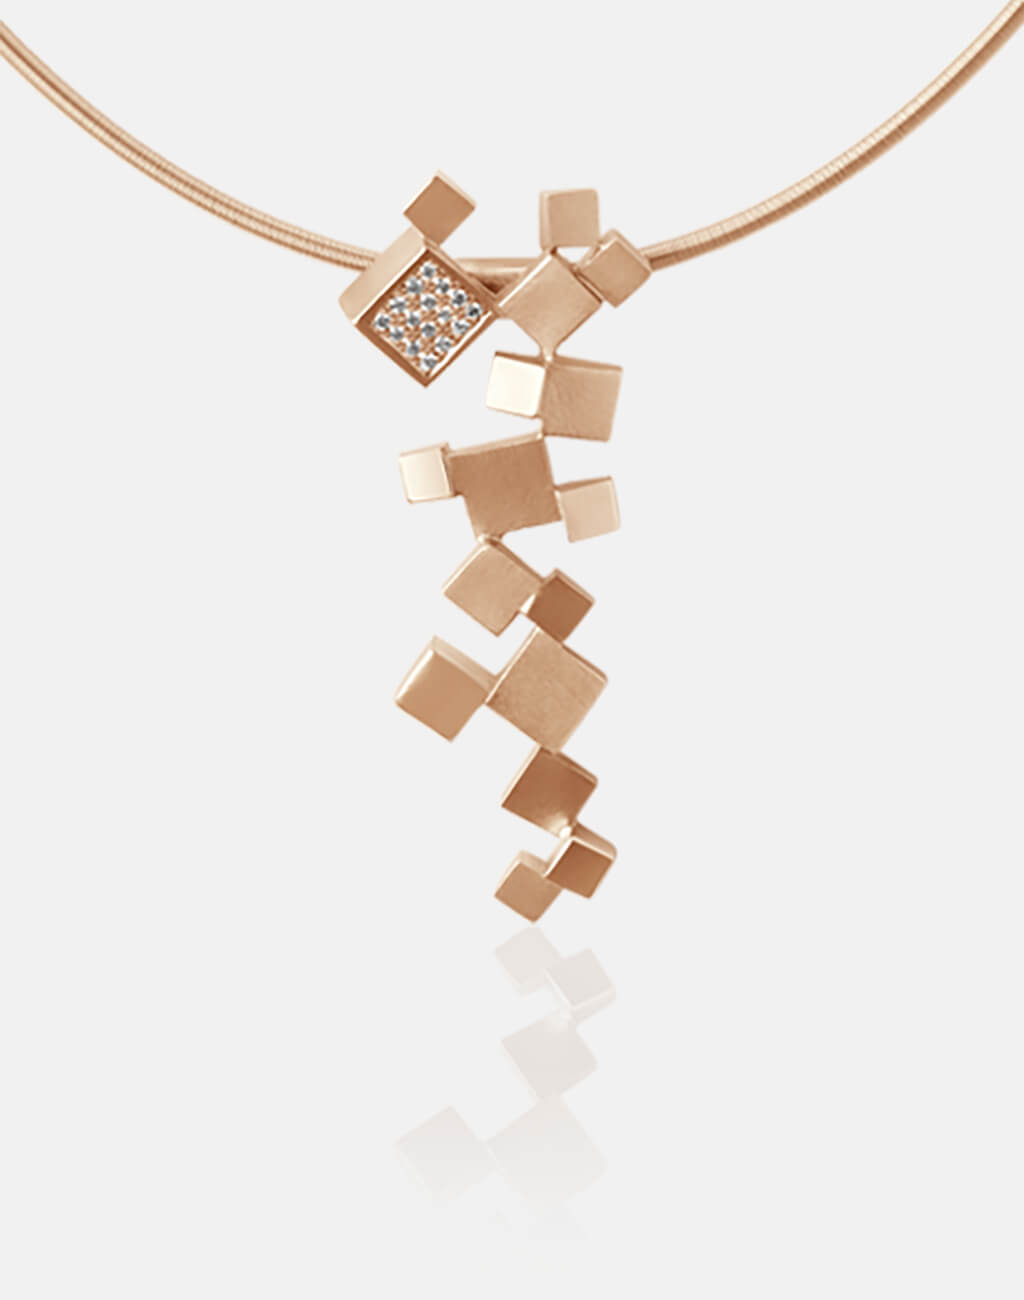 Quadroci | Collier, Kette, Kettenanhänger - 750/- Roségold, Diamanten-Brillanten | necklace, pendant - 18kt rose gold, diamonds | SYNO-Schmuck.com